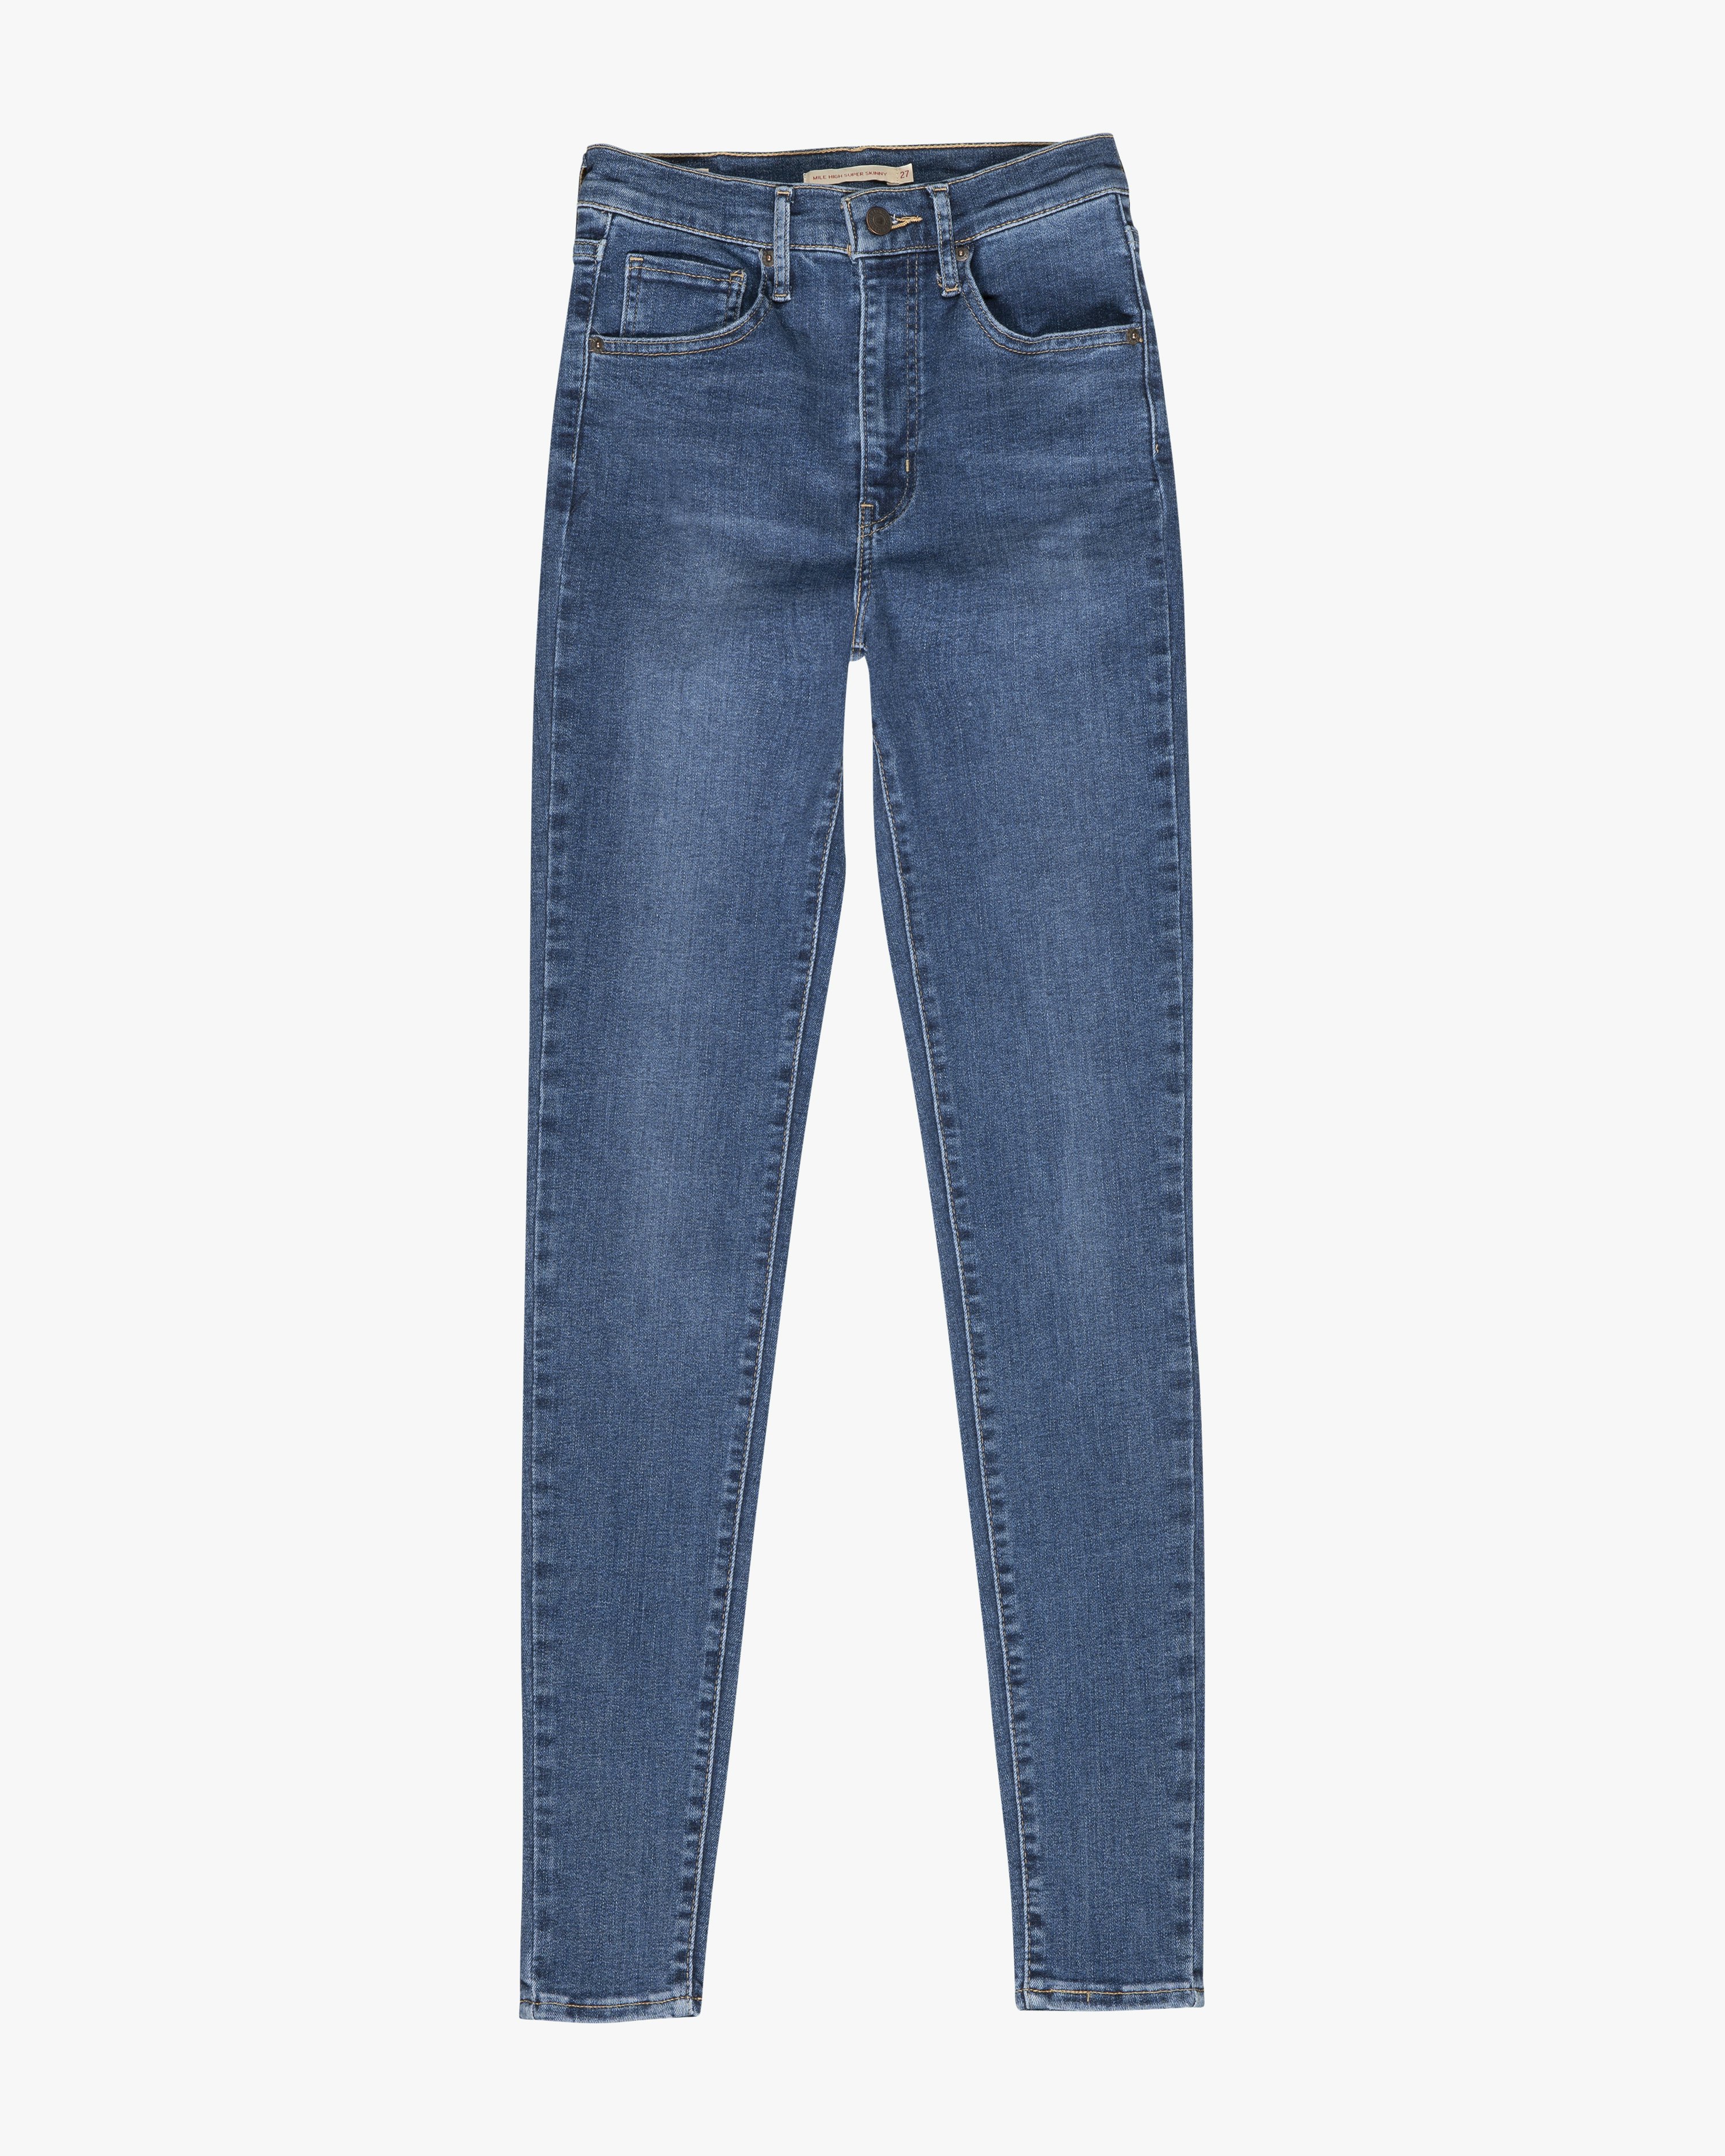 90's Made in USA Levi's 501 denim jeans W25 x L30.5